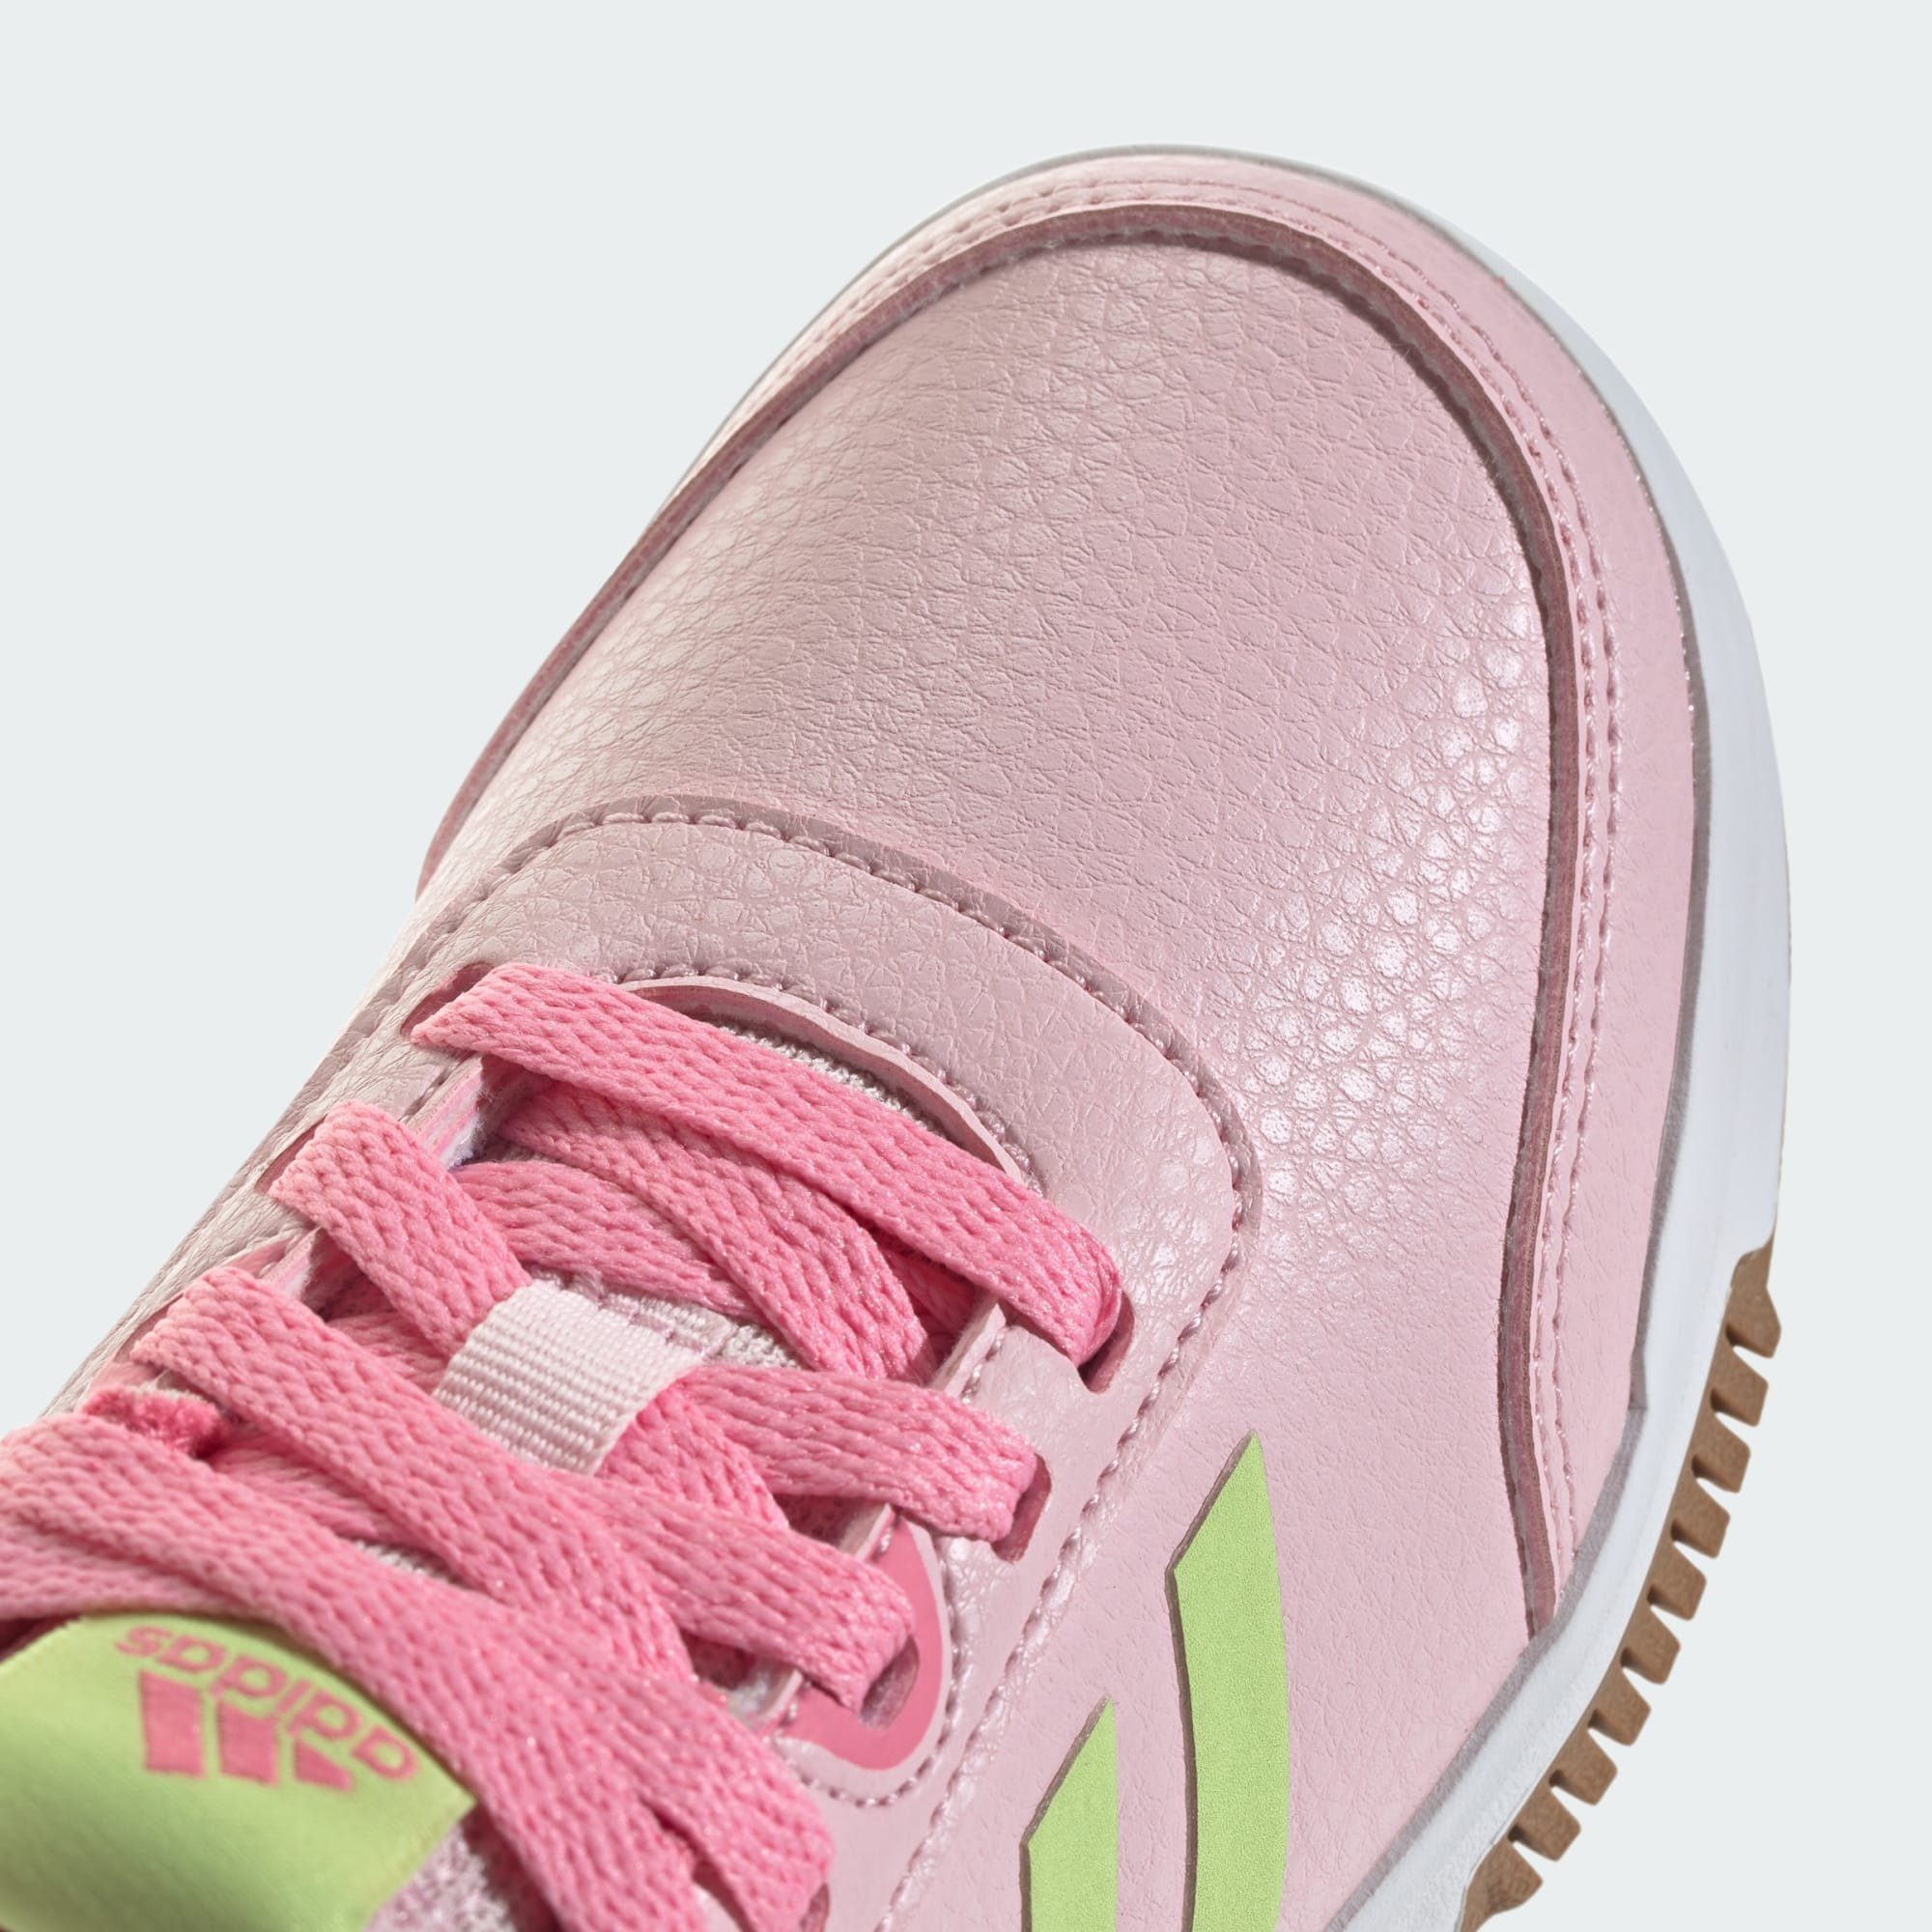 adidas Lime SPORT Pulse / TENSAUR SCHUH LACE Pink Pink Clear / Sneaker Bliss TRAINING Sportswear